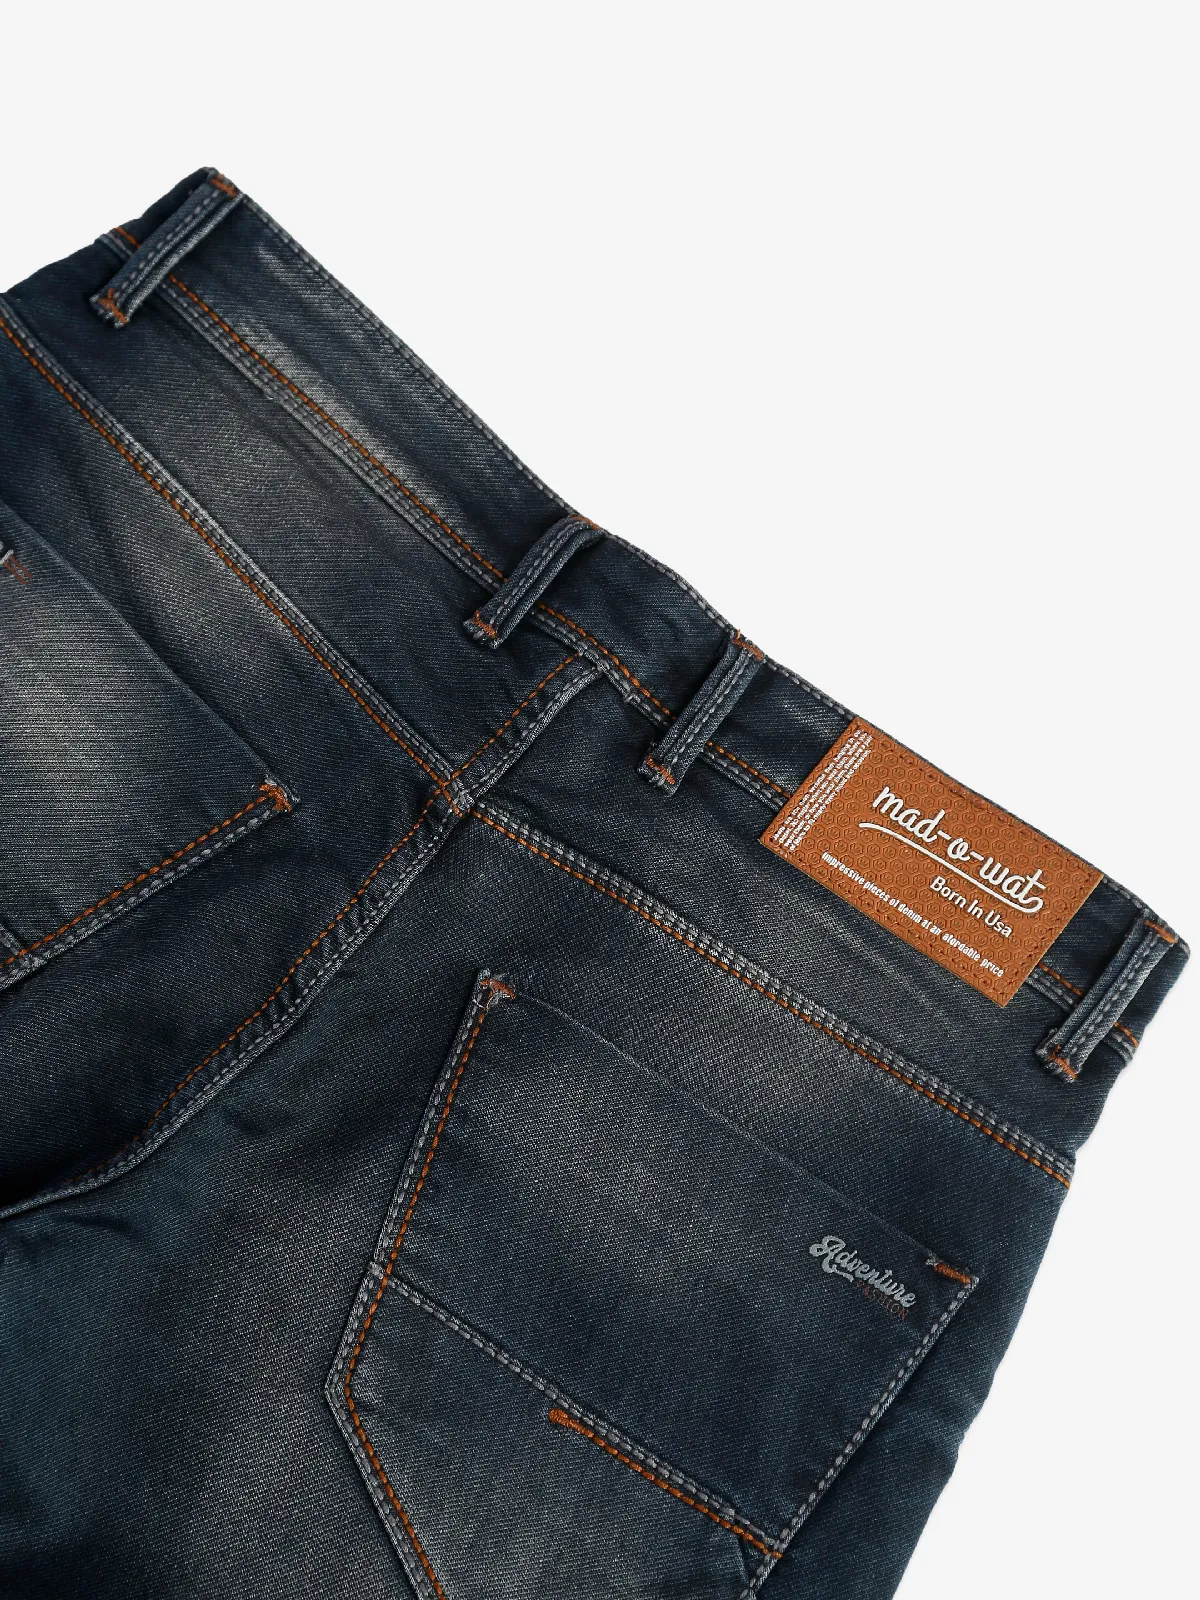 Mad-O-Wat dark navy washed regular fit jeans